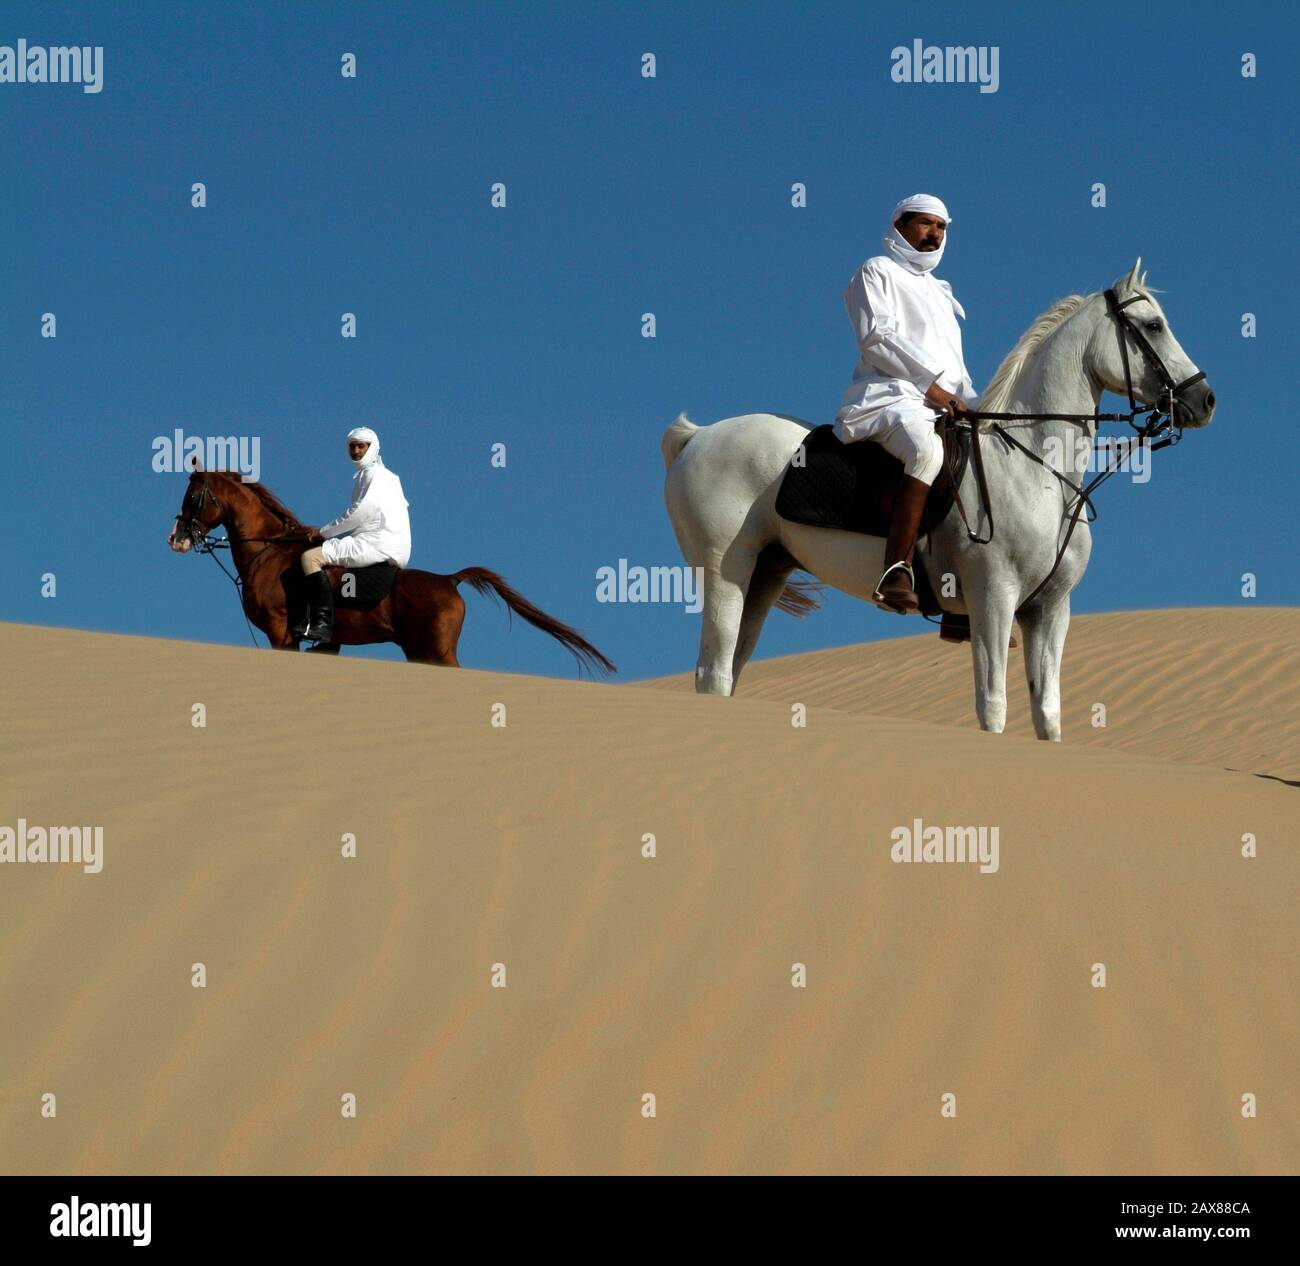 Arabian horses in the desert near Dubai, UAE. Stock Photo